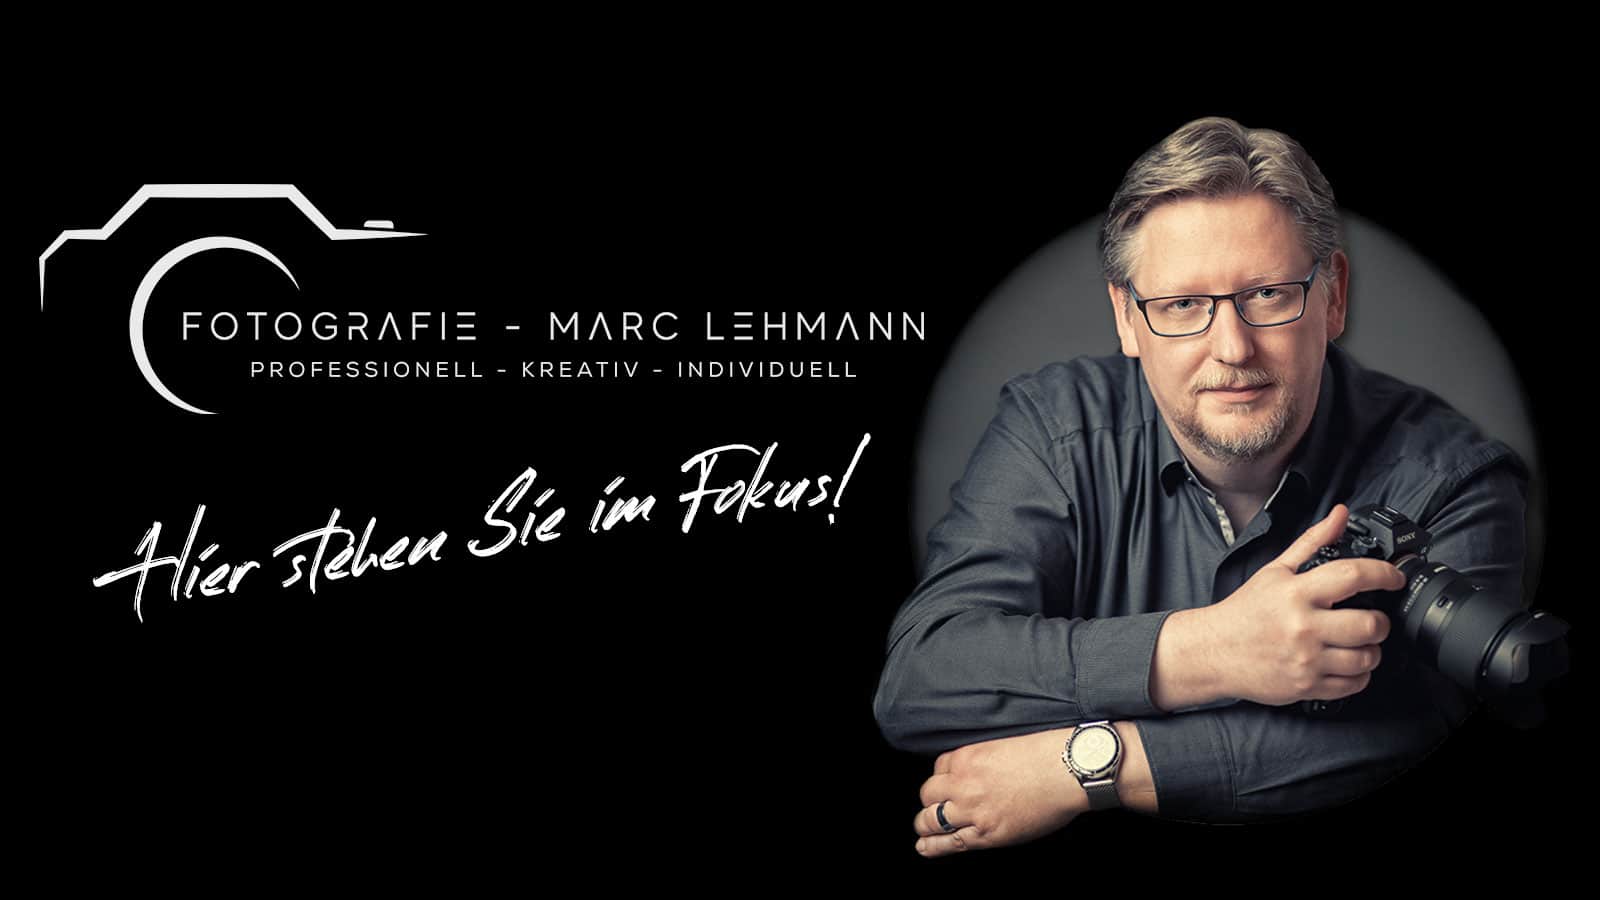 Fotografie Marc Lehmann - Fotoshootings nach Maß in Leverkusen und Umgebung